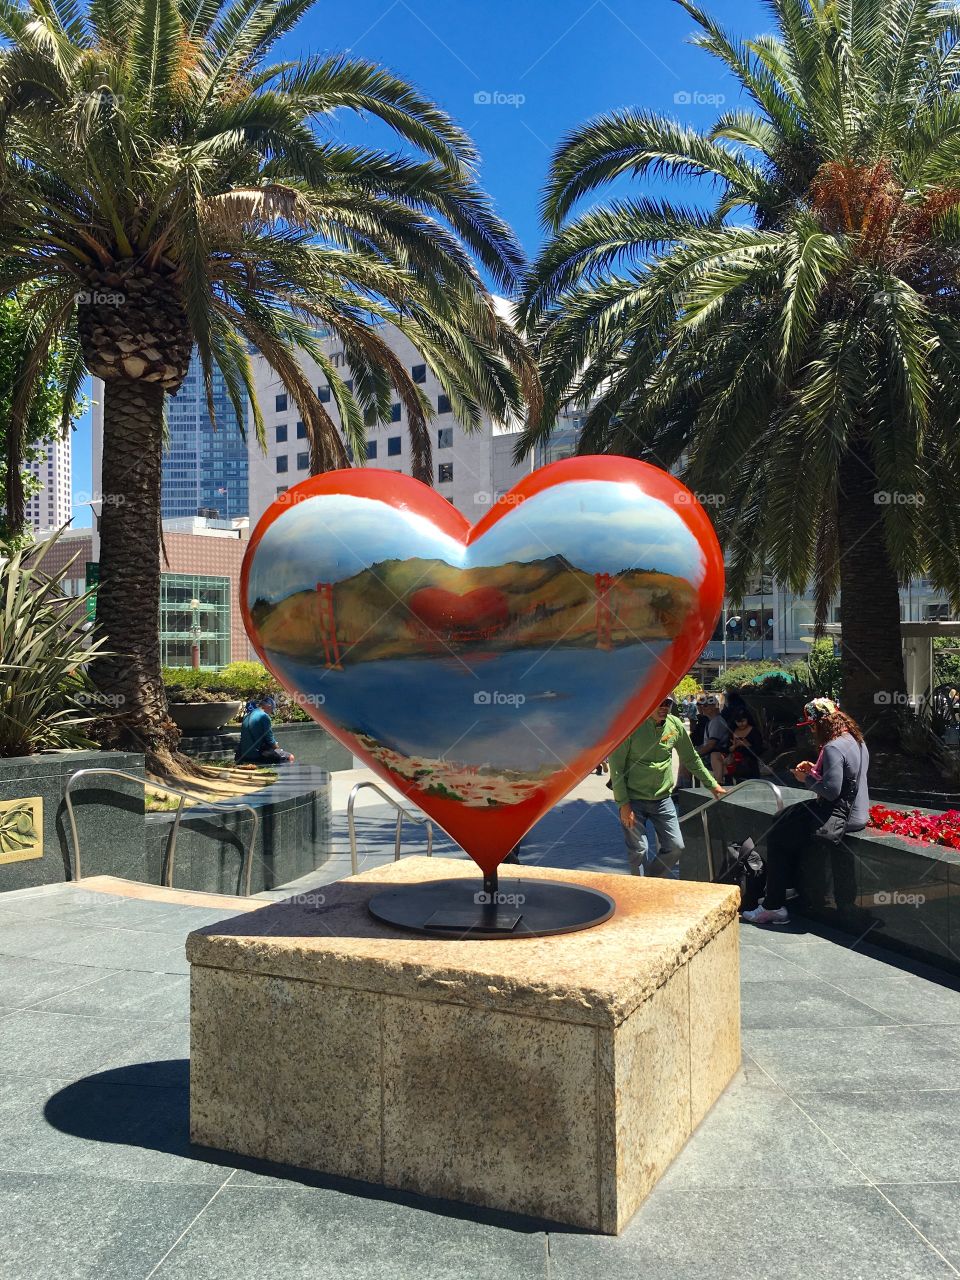 Heart in San Francisco